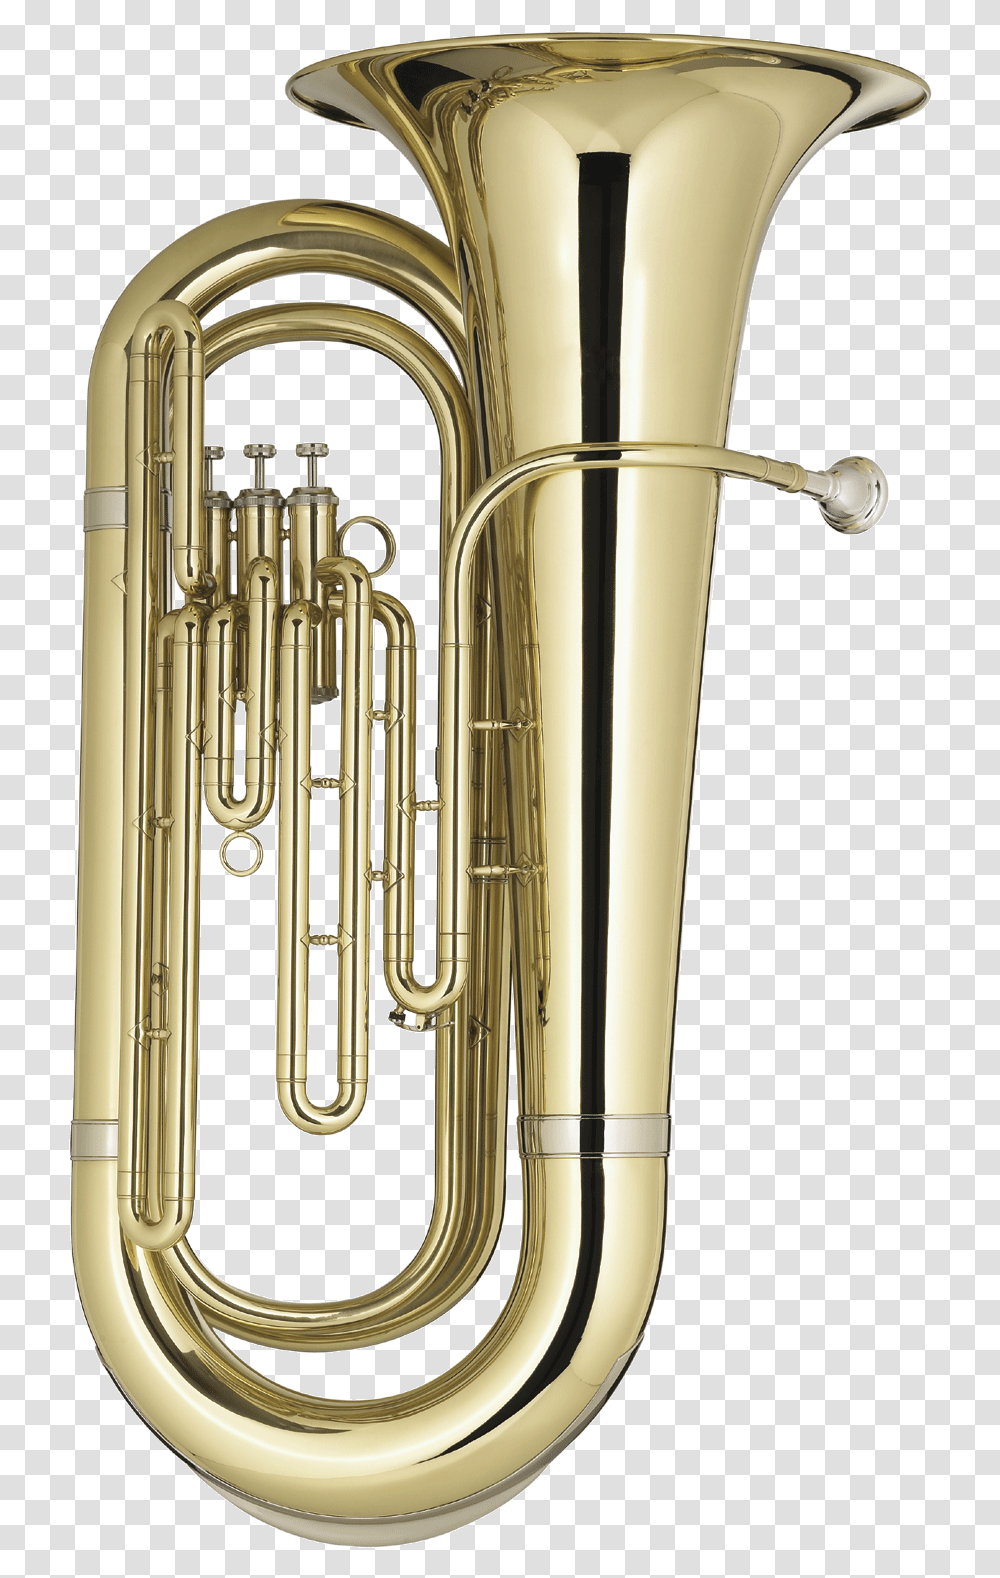 Haize Metalezko Musika Tresnak Baritone Compared To Tuba, Horn, Brass Section, Musical Instrument, Euphonium Transparent Png